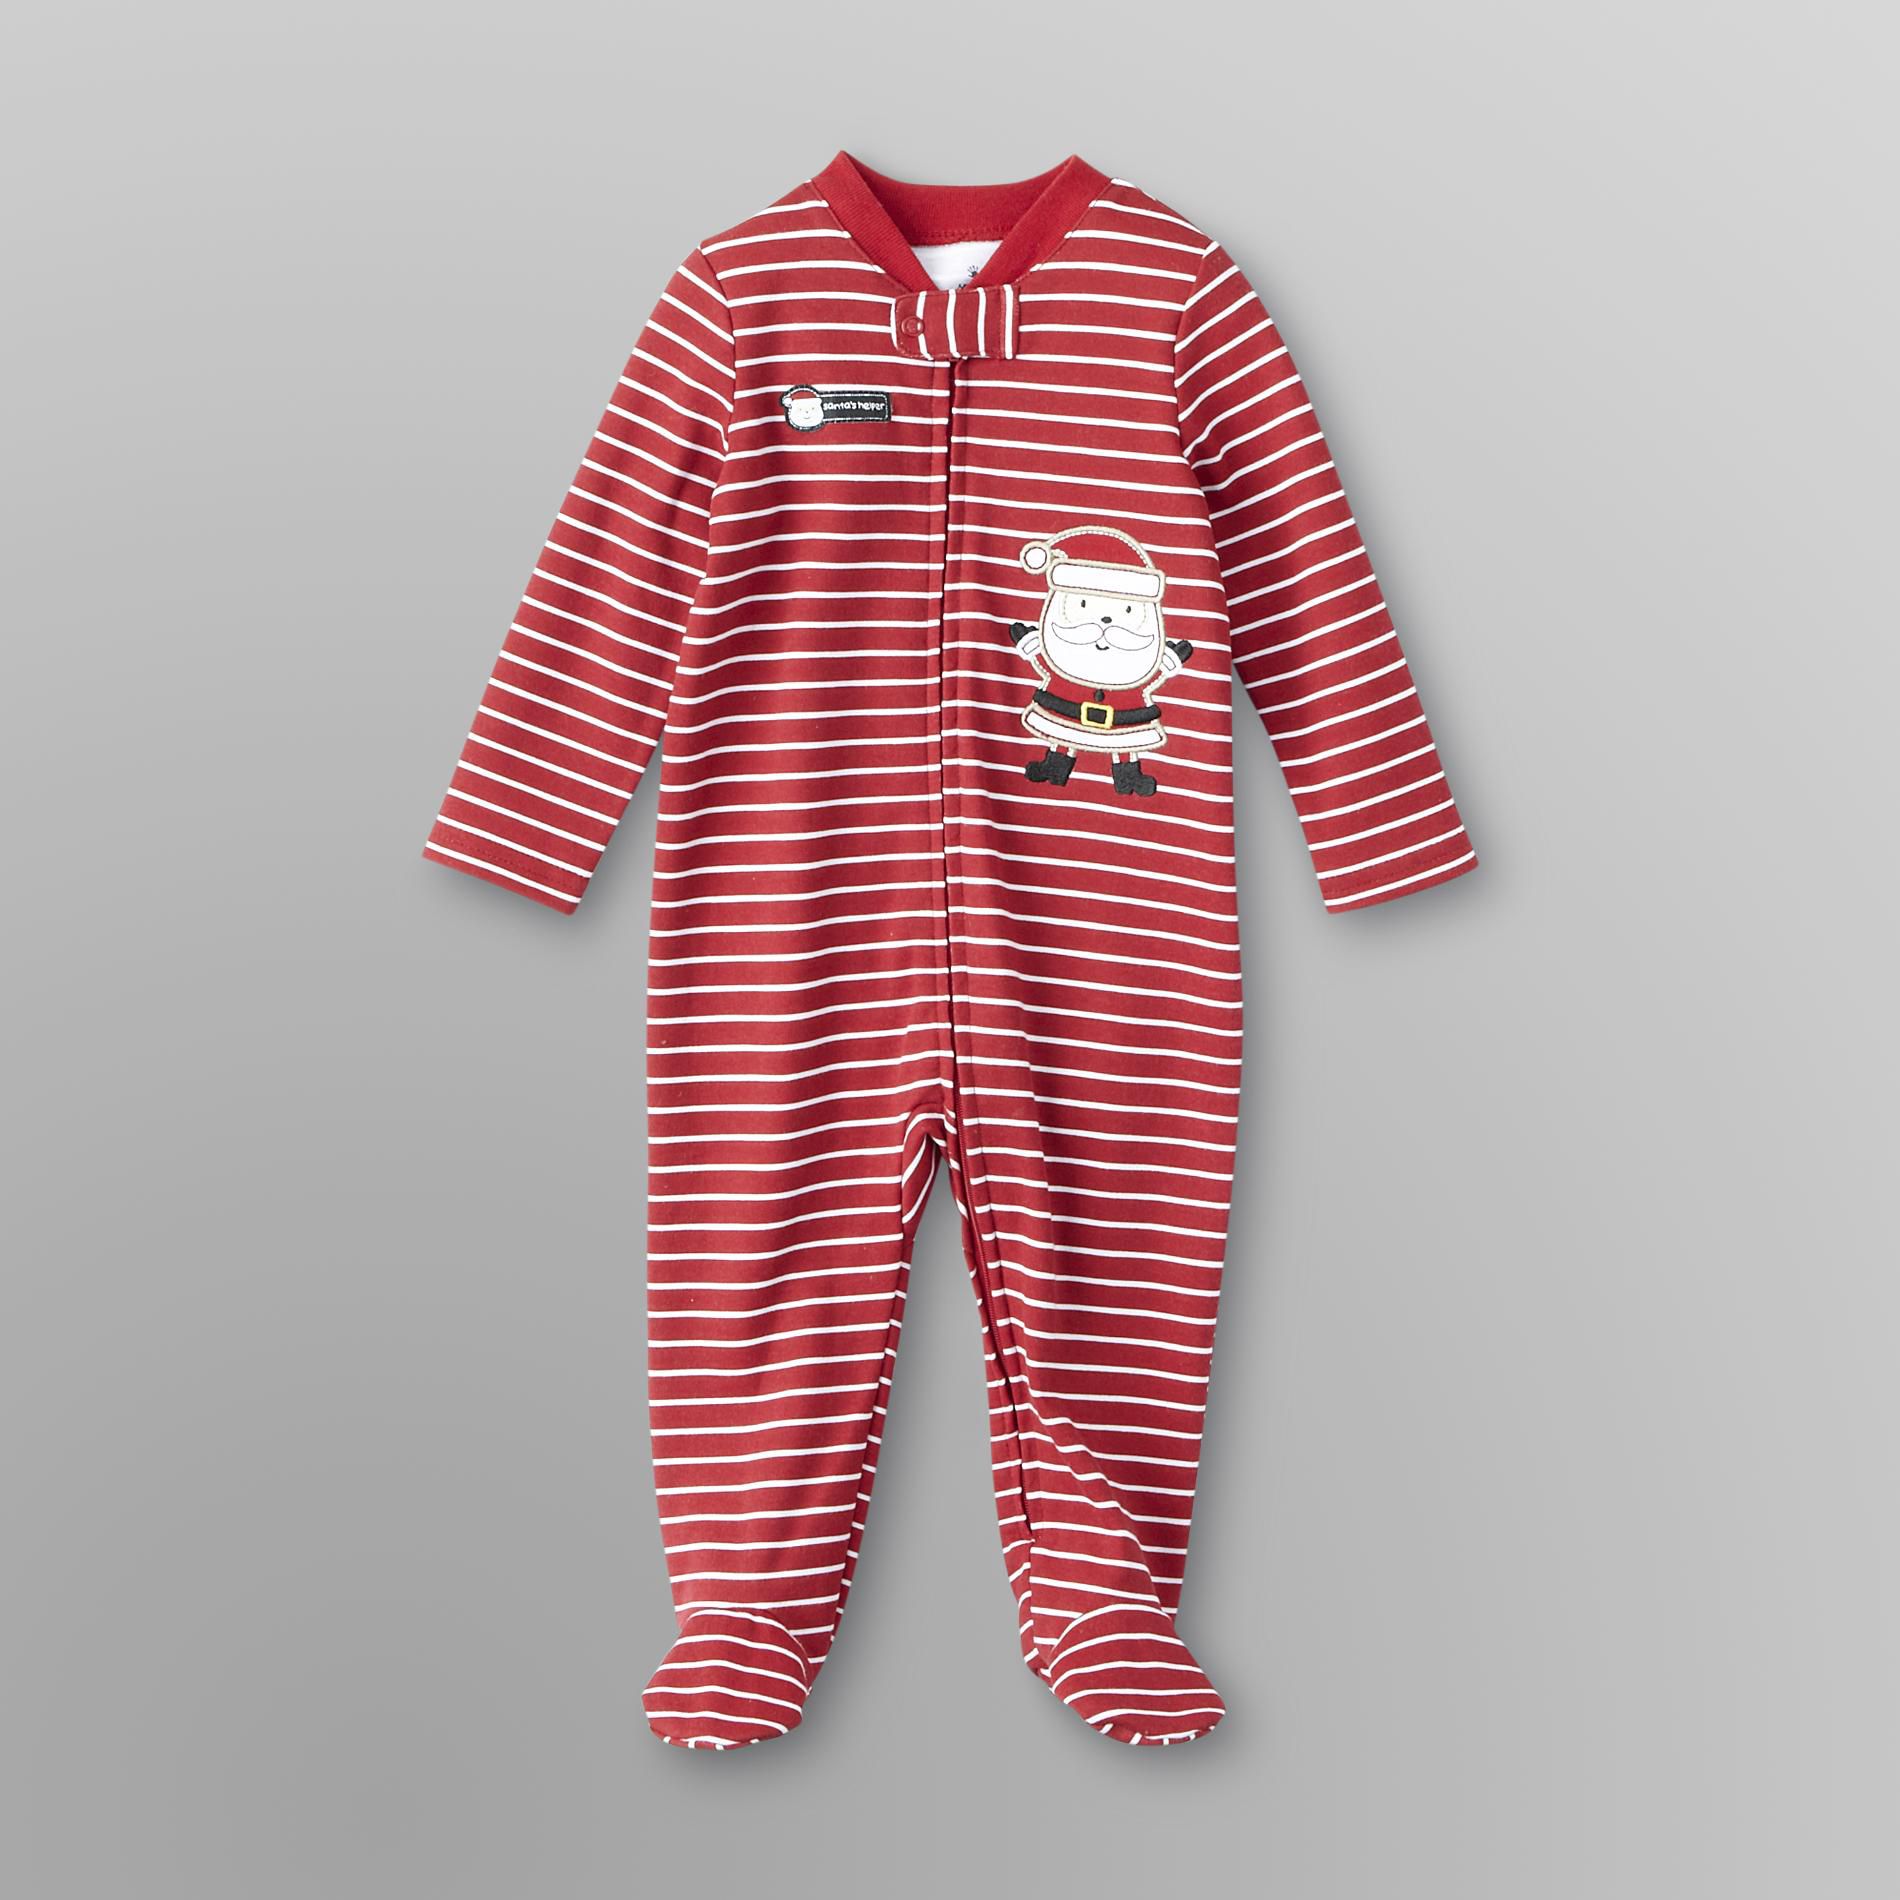 Small Wonders Infant Boy's Footed Sleeper Pajamas - Christmas